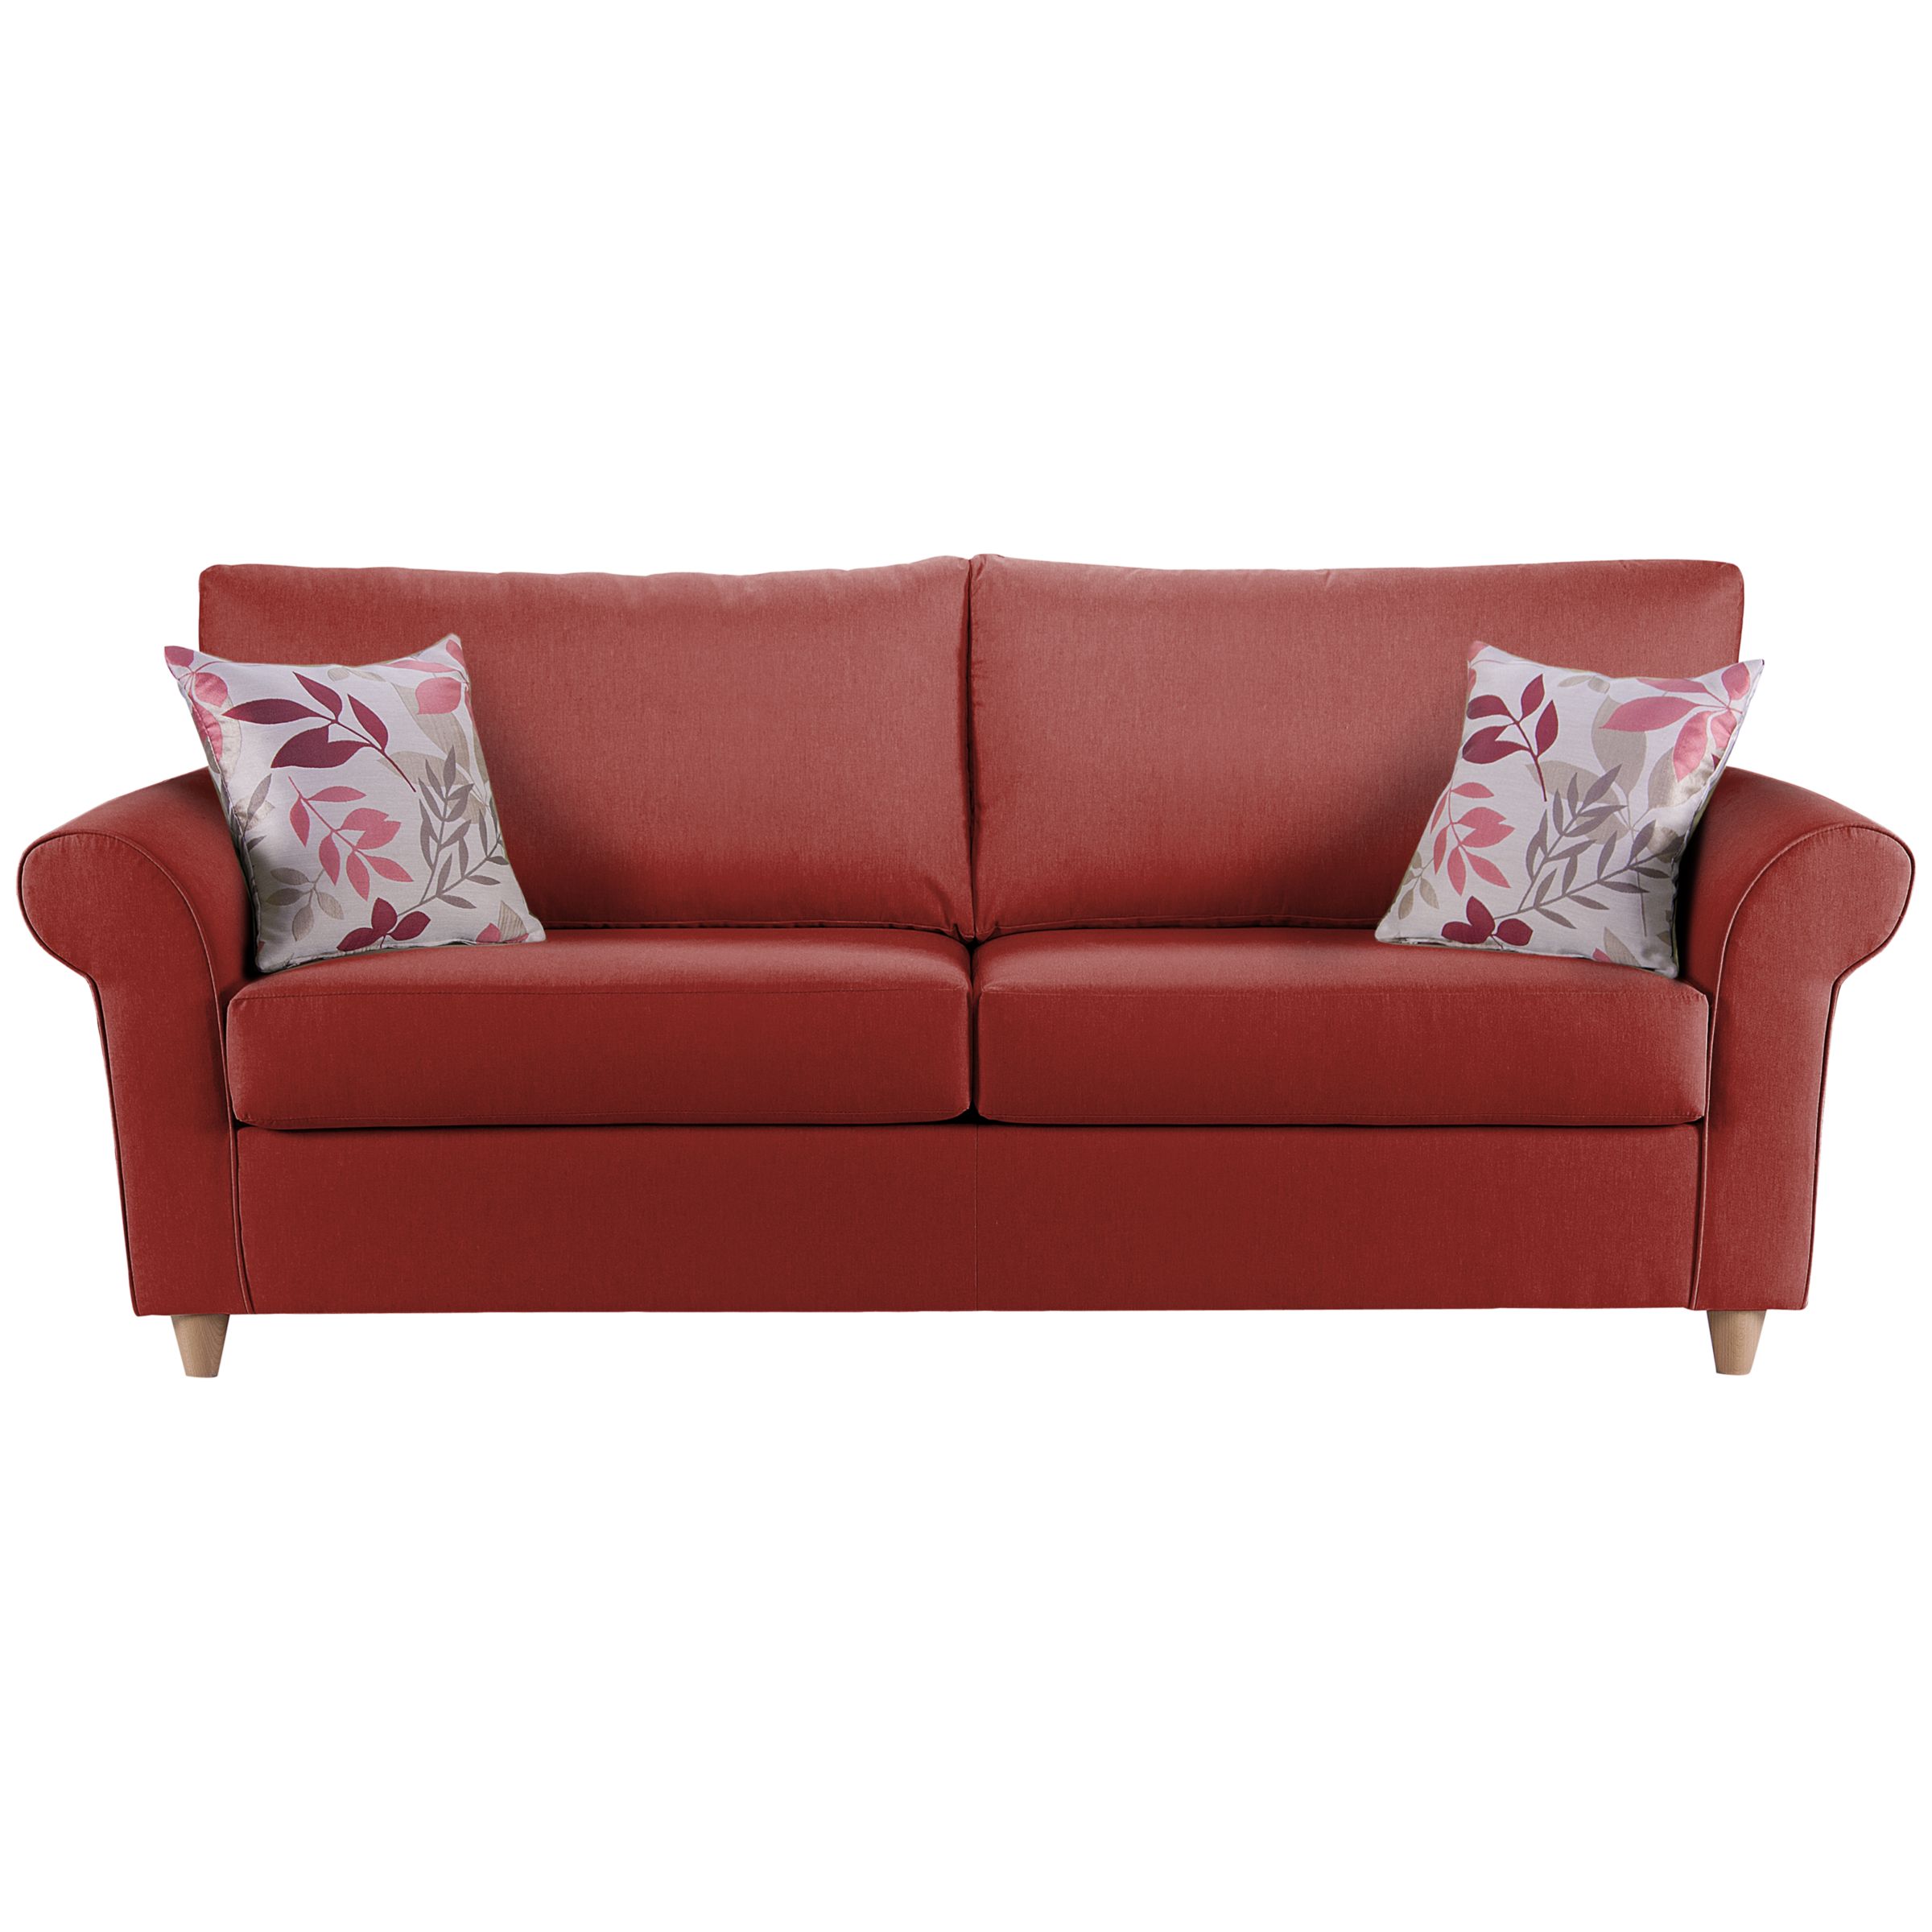 John Lewis Gershwin Grand Sofa Bed with Pocket Sprung Mattress, Rouge, width 228cm